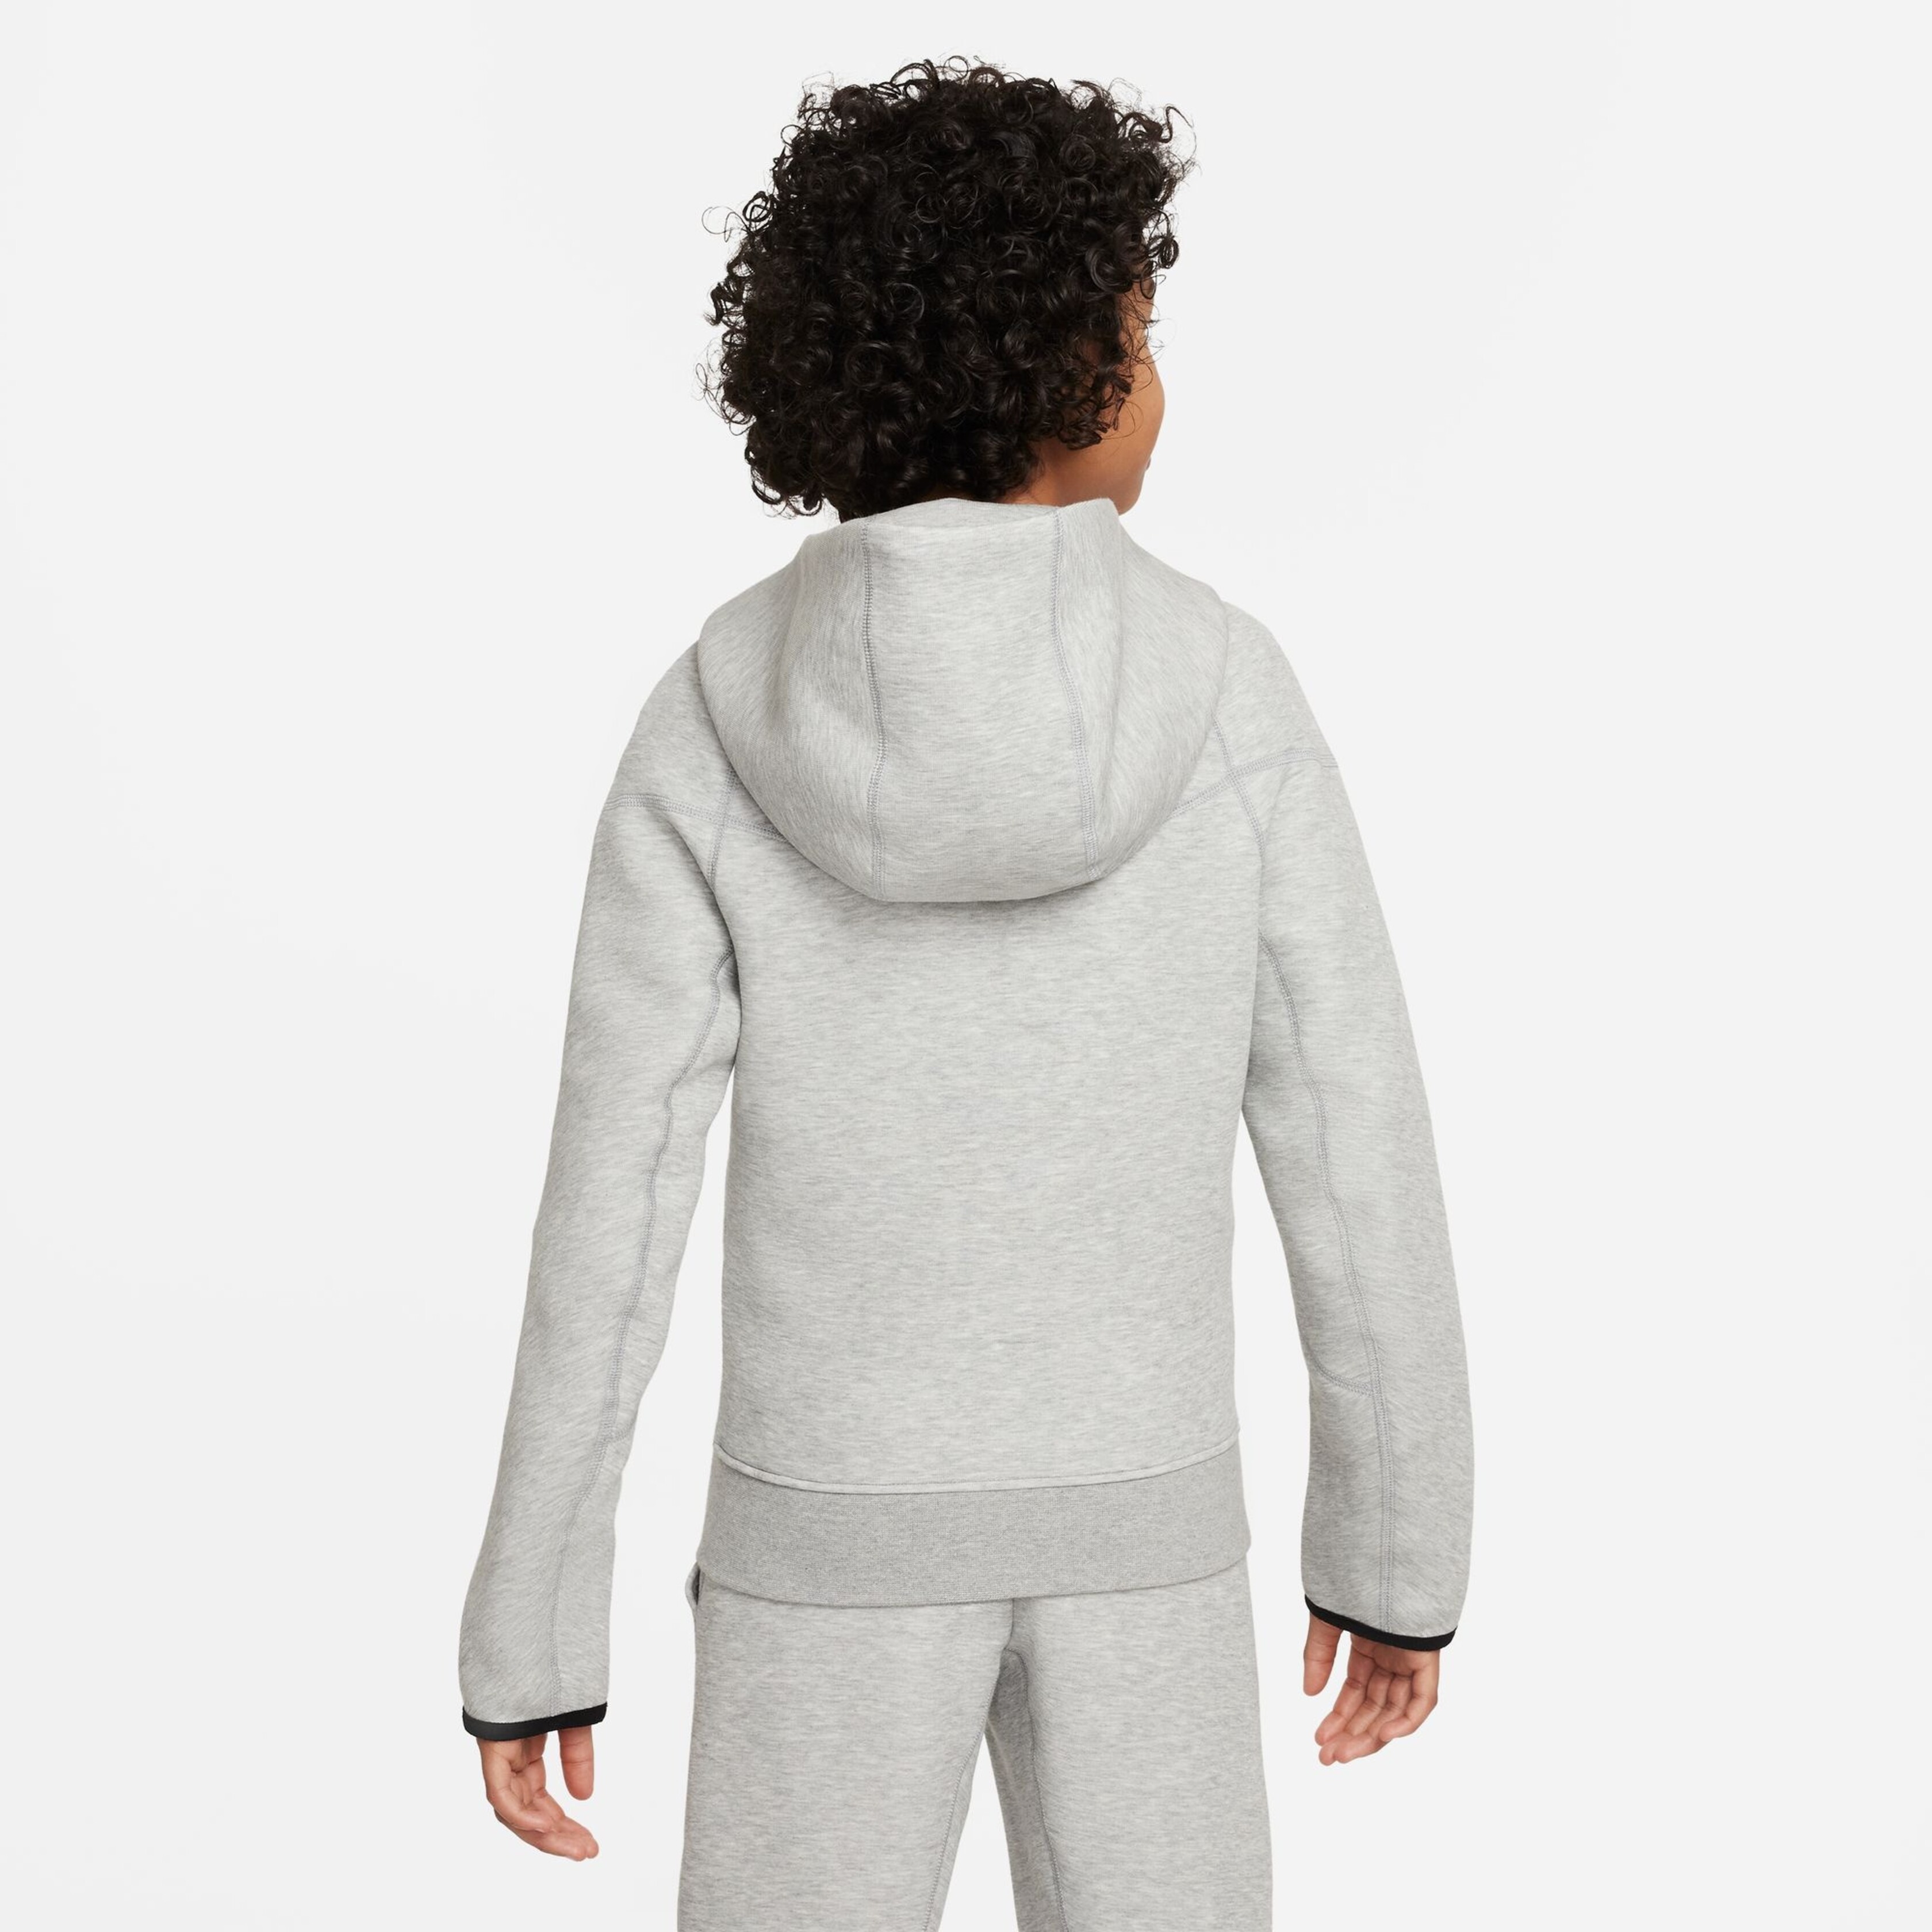 Nike Tech Fleece Older Kids Full-Zip Hoodie Grey FD3285-063 - Sam Tabak